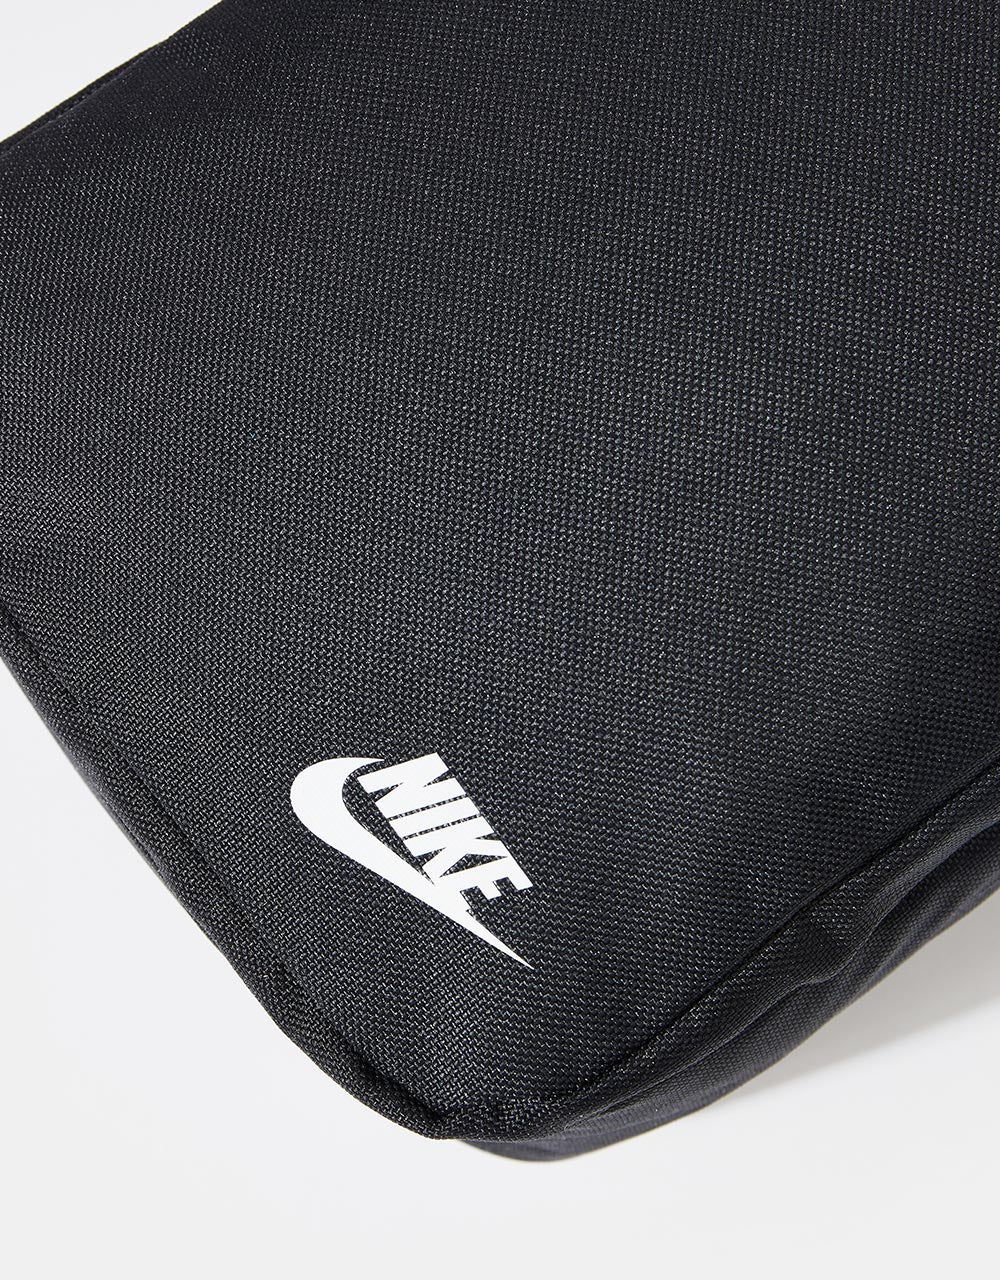 Nike SB Heritage Cross Body Bag SF - Black/Black/White